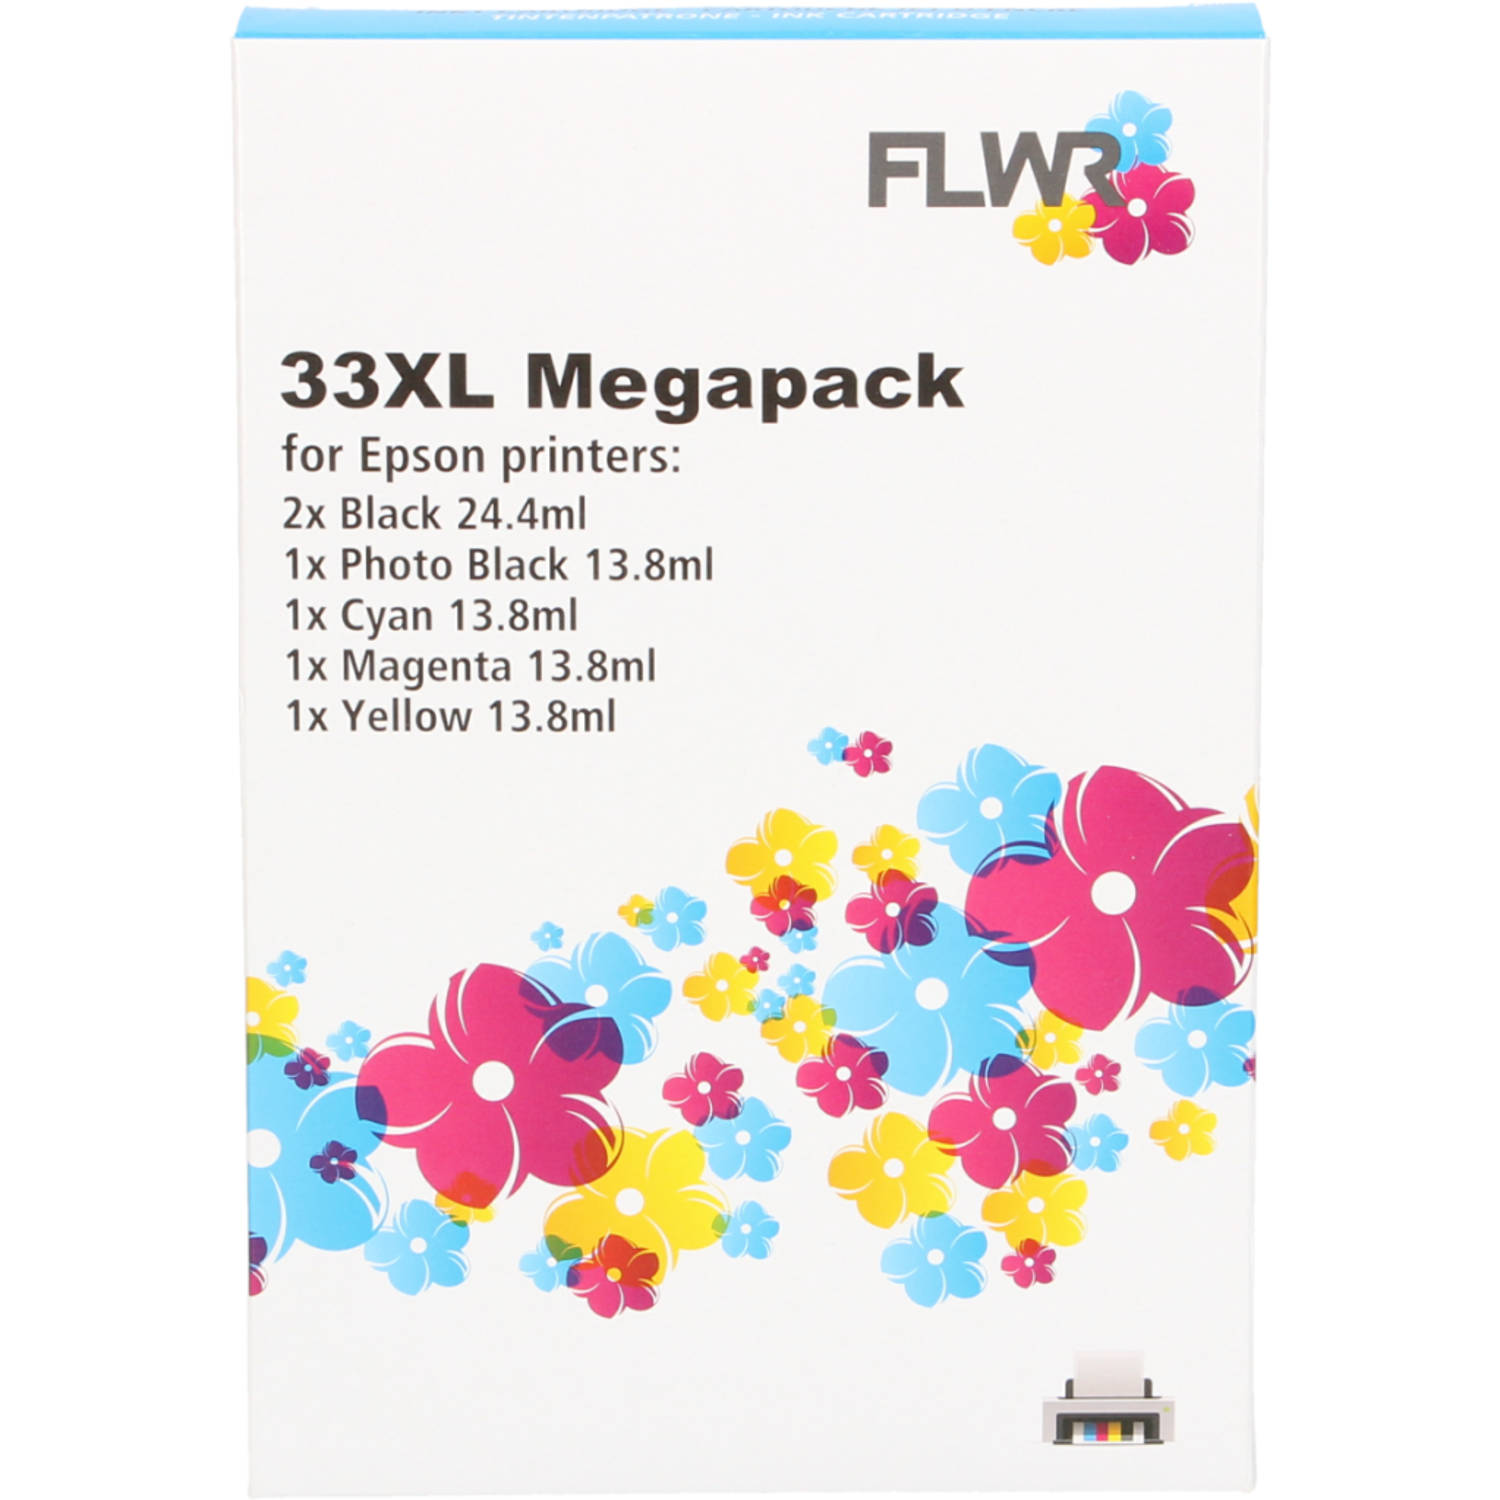 FLWR Epson T3351/3361/2/3/4 Megapack cartridge